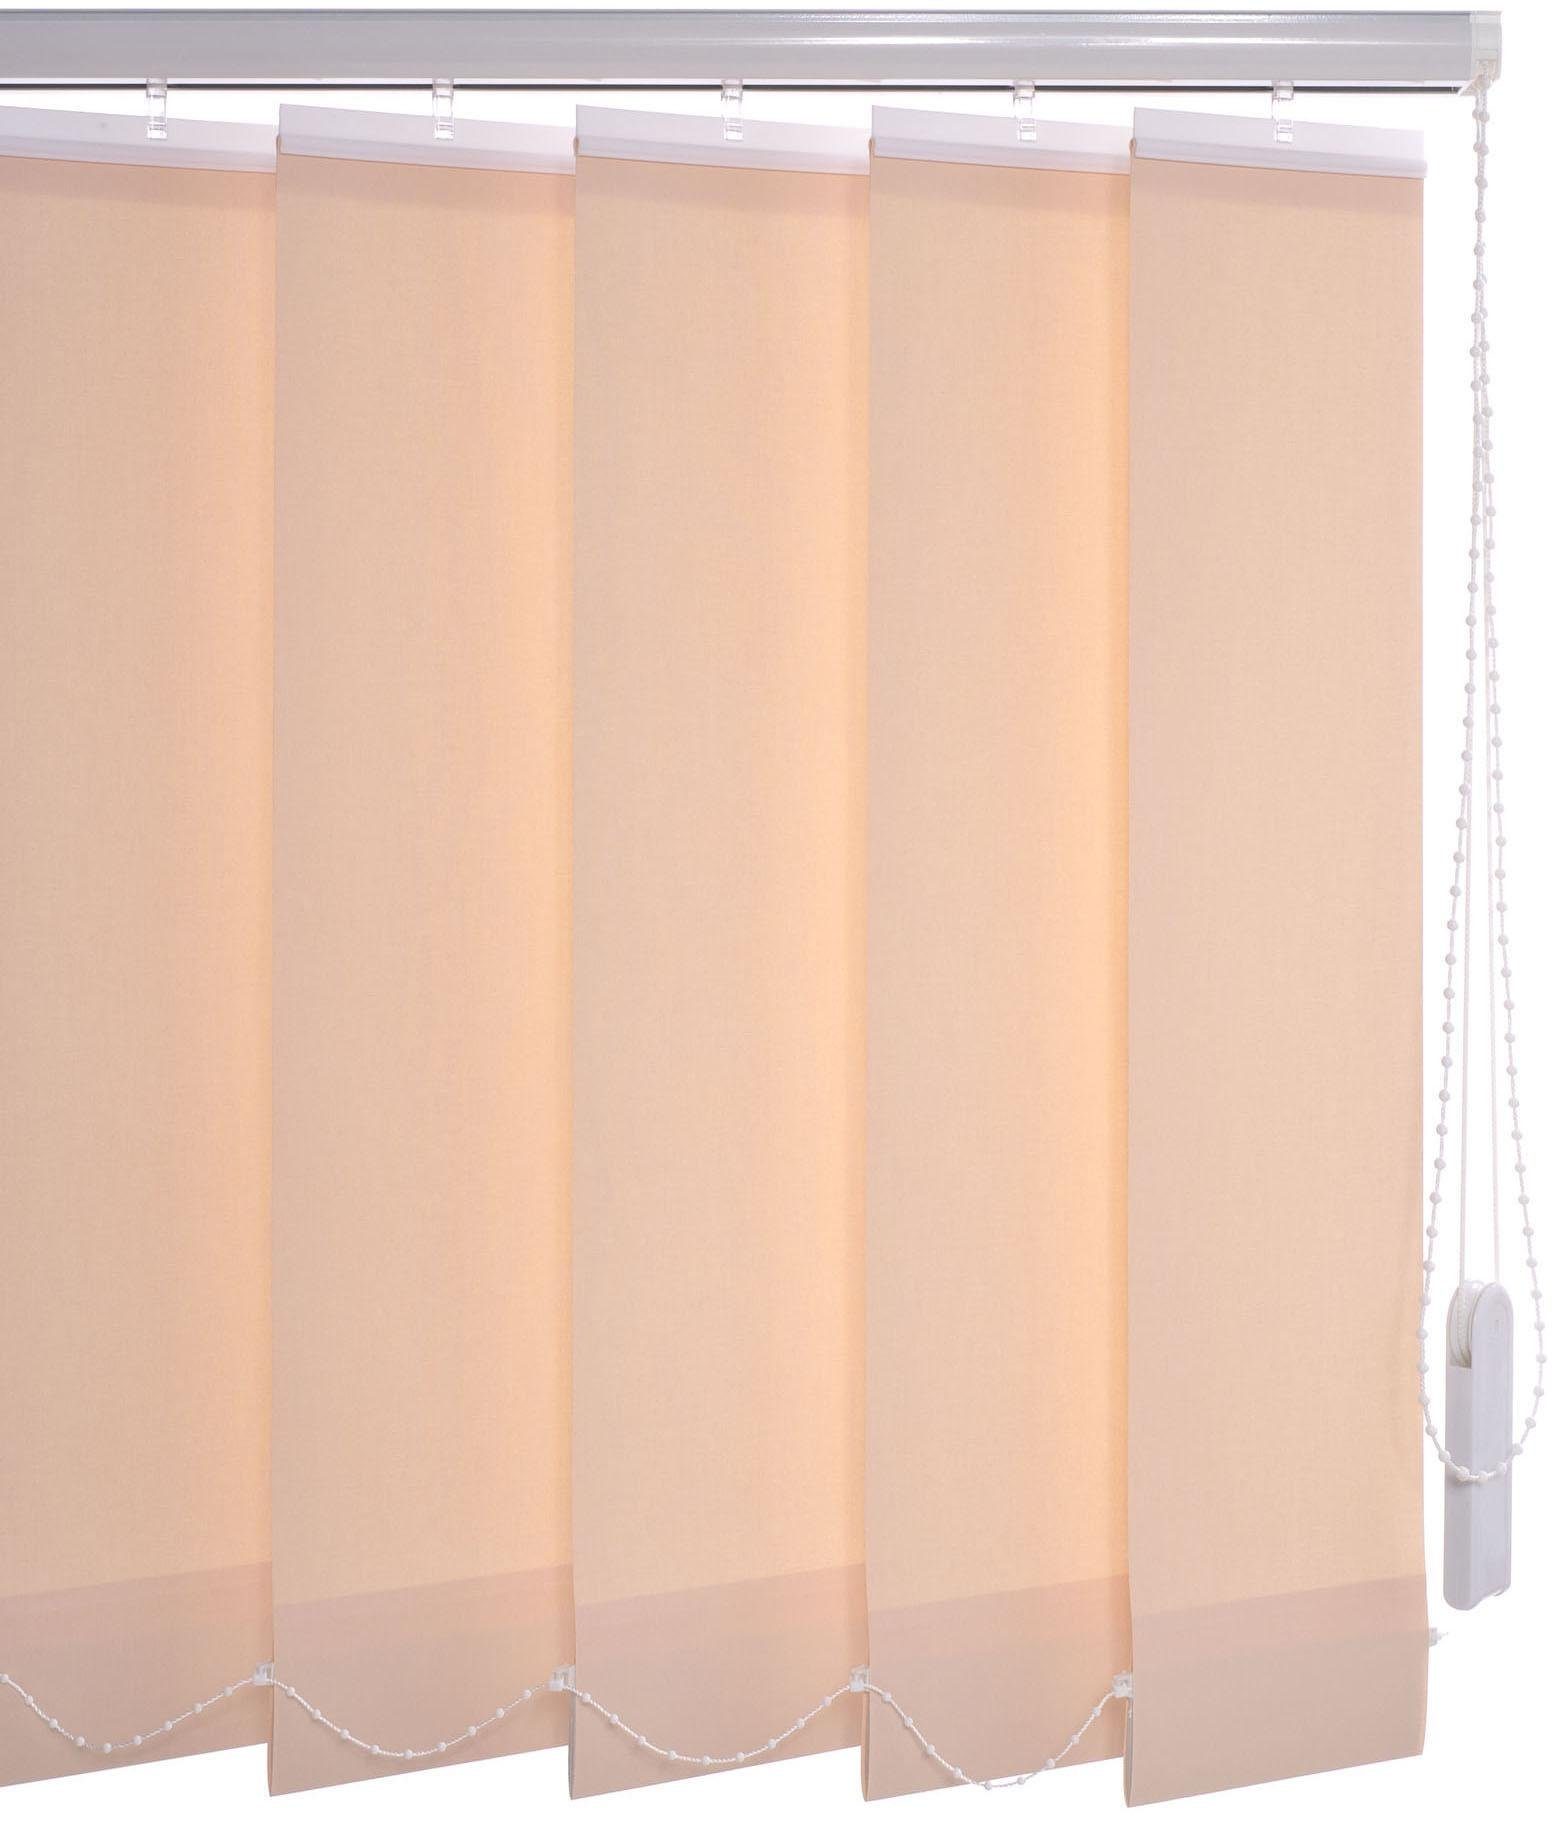 Lamellenvorhang 127 mm, mit Bohren Liedeco, Vertikalanlage apricot